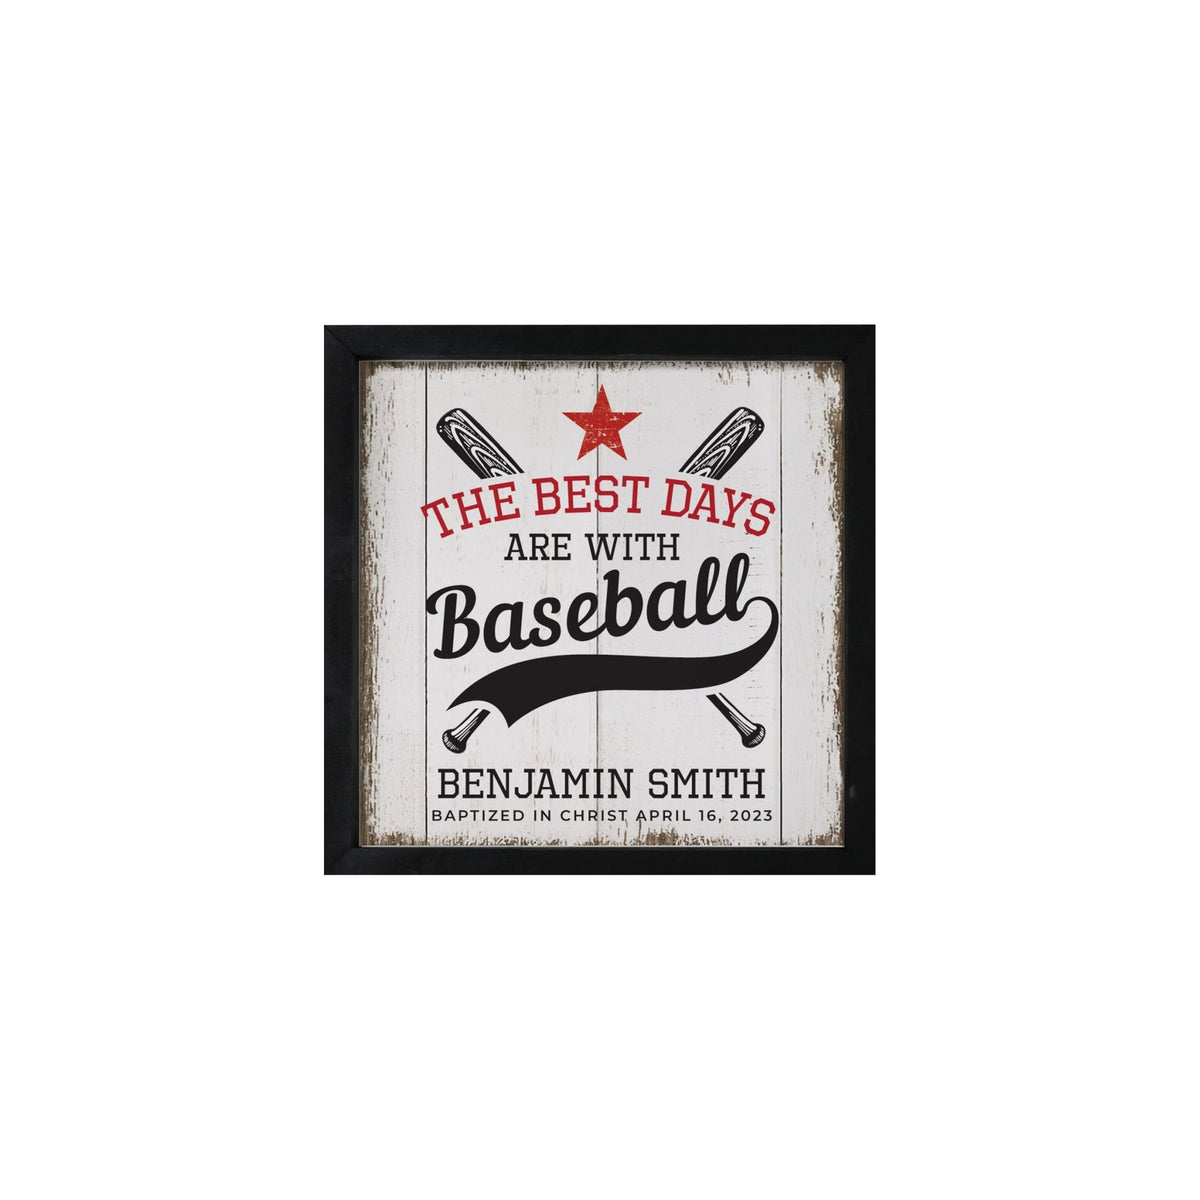 Personalized Rustic Wooden Baseball Shadow Box Shelf Décor With Inspiring Bible Verses - Balls, Bats, &amp; Baseball Hats - LifeSong Milestones